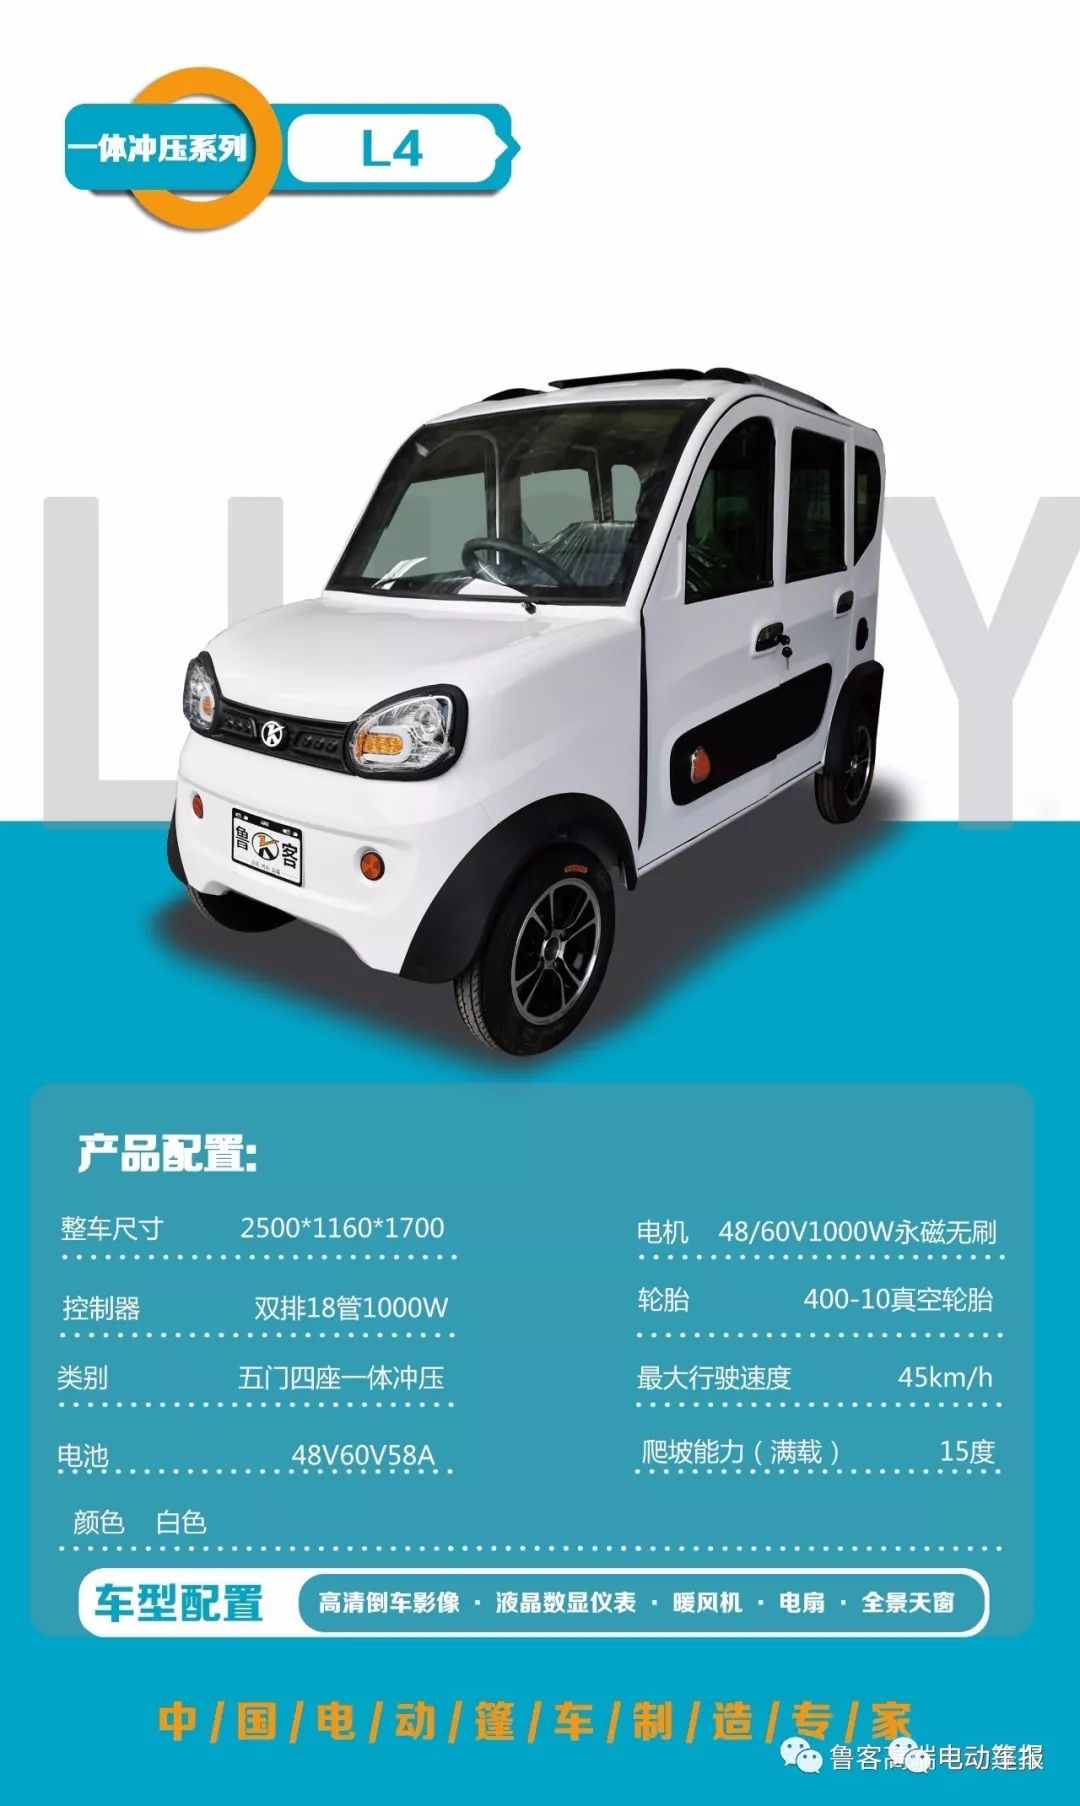 l4 l1 l7 比起眼下市场上的电动车产品而言,鲁客c200/c300系列及一体